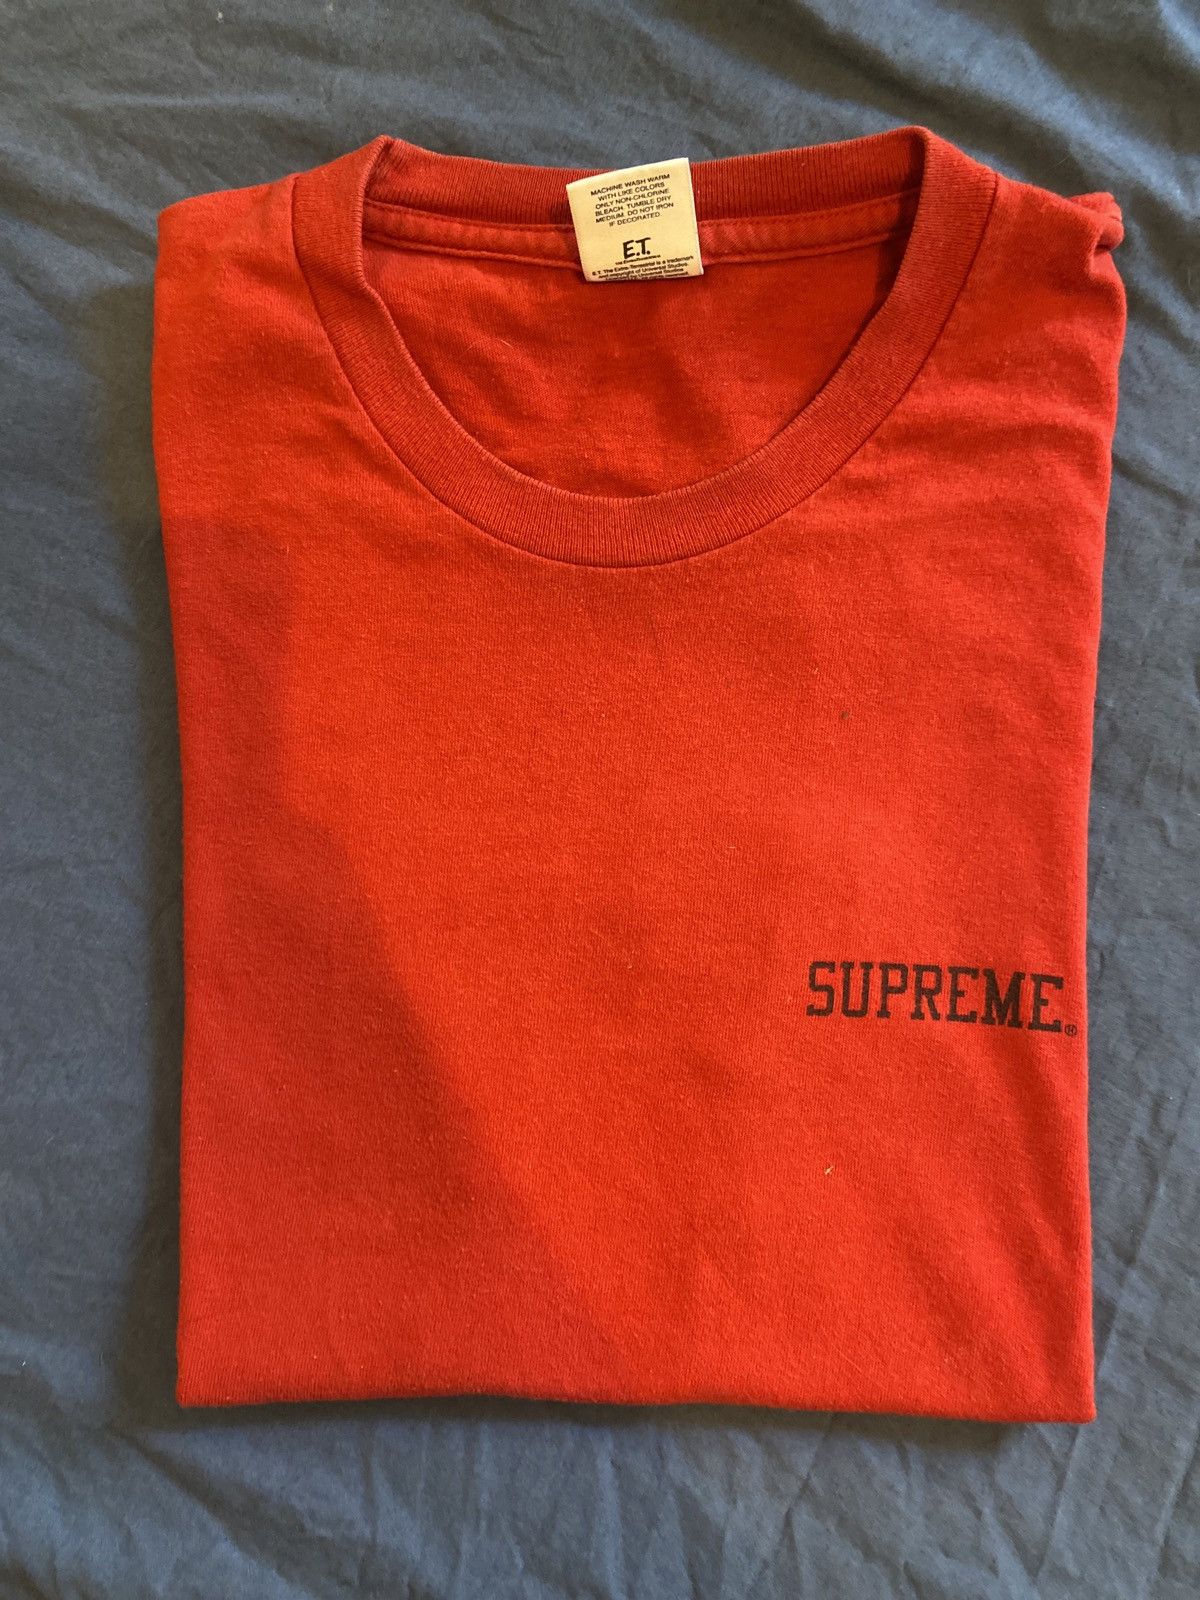 Supreme Supreme ET t-shirt red size S VG condition FW15 Size US S / EU 44-46 / 1 - 7 Thumbnail